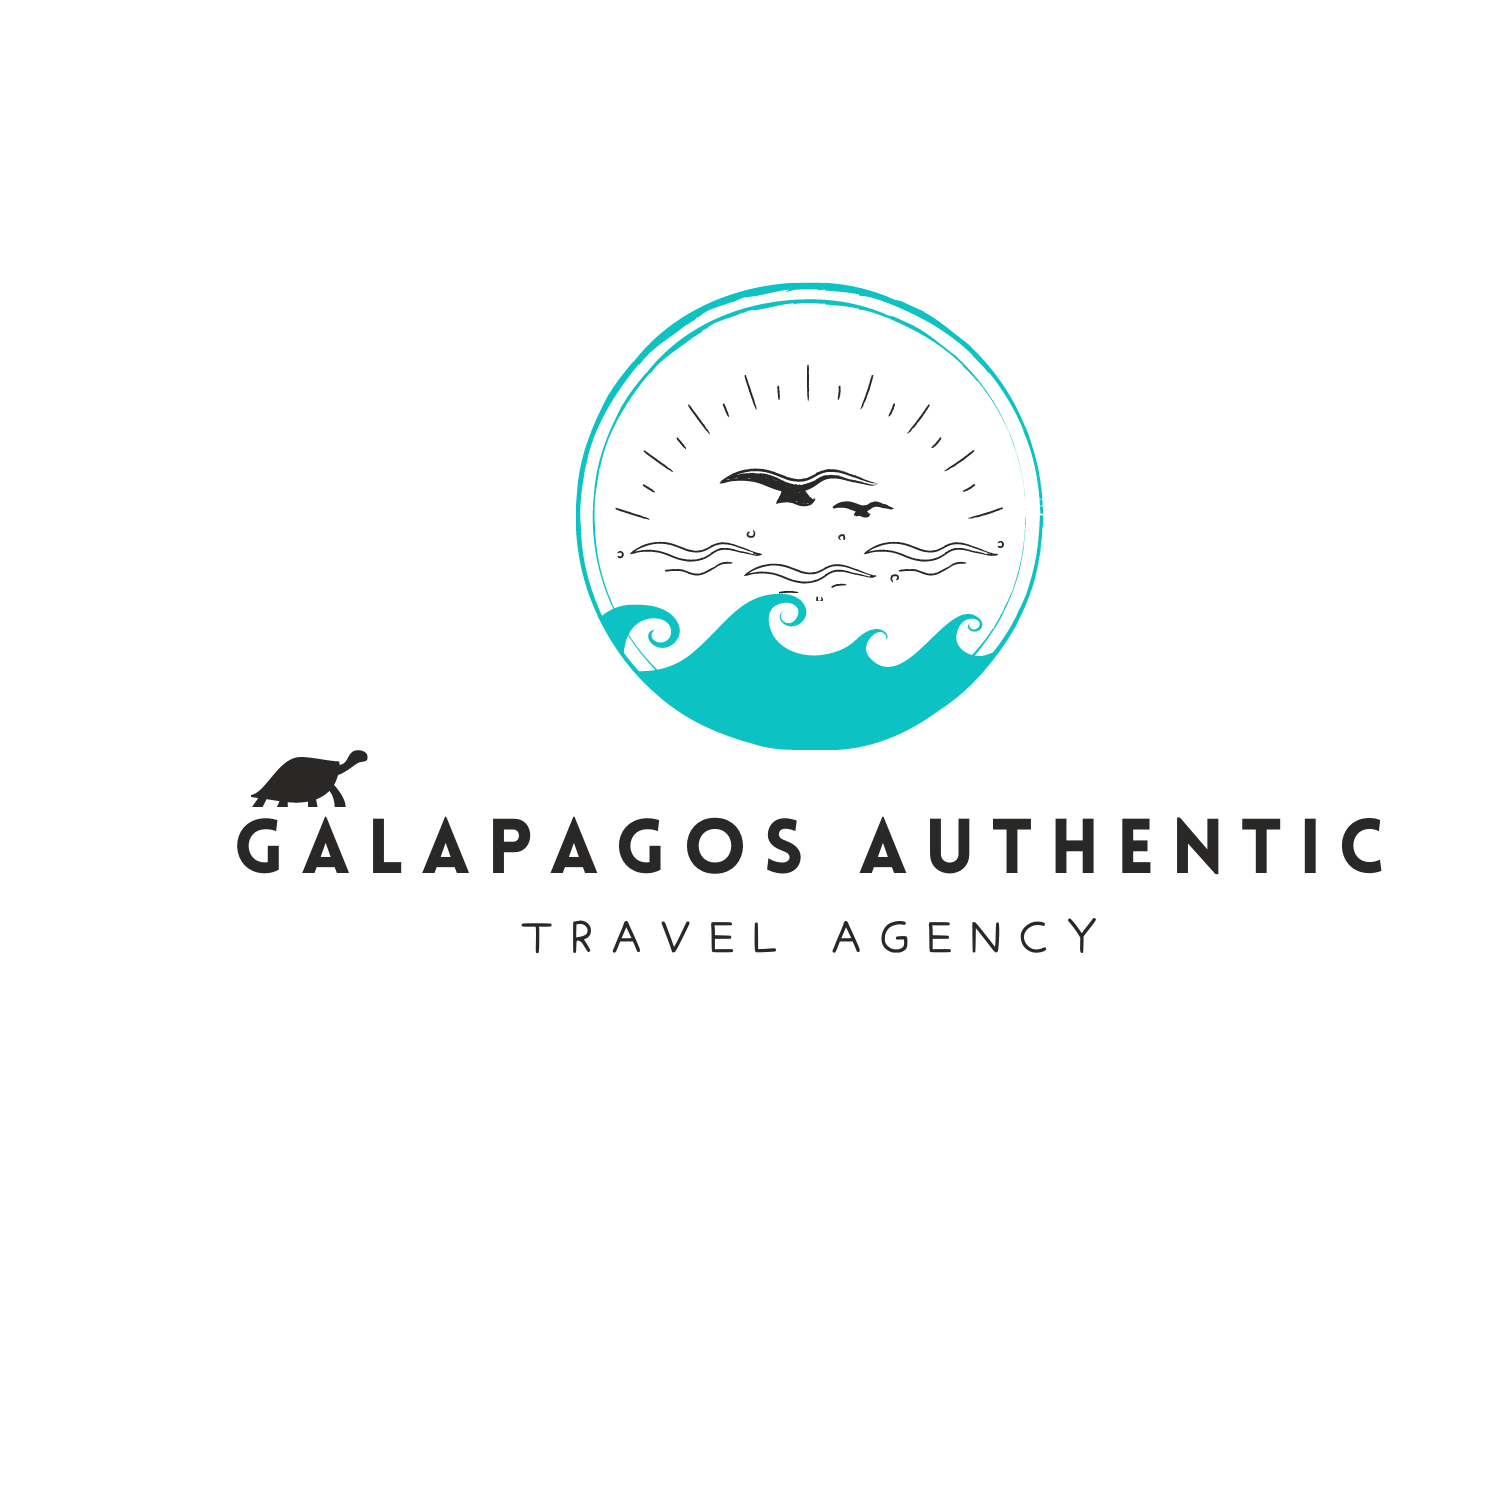 travel agency santa cruz galapagos